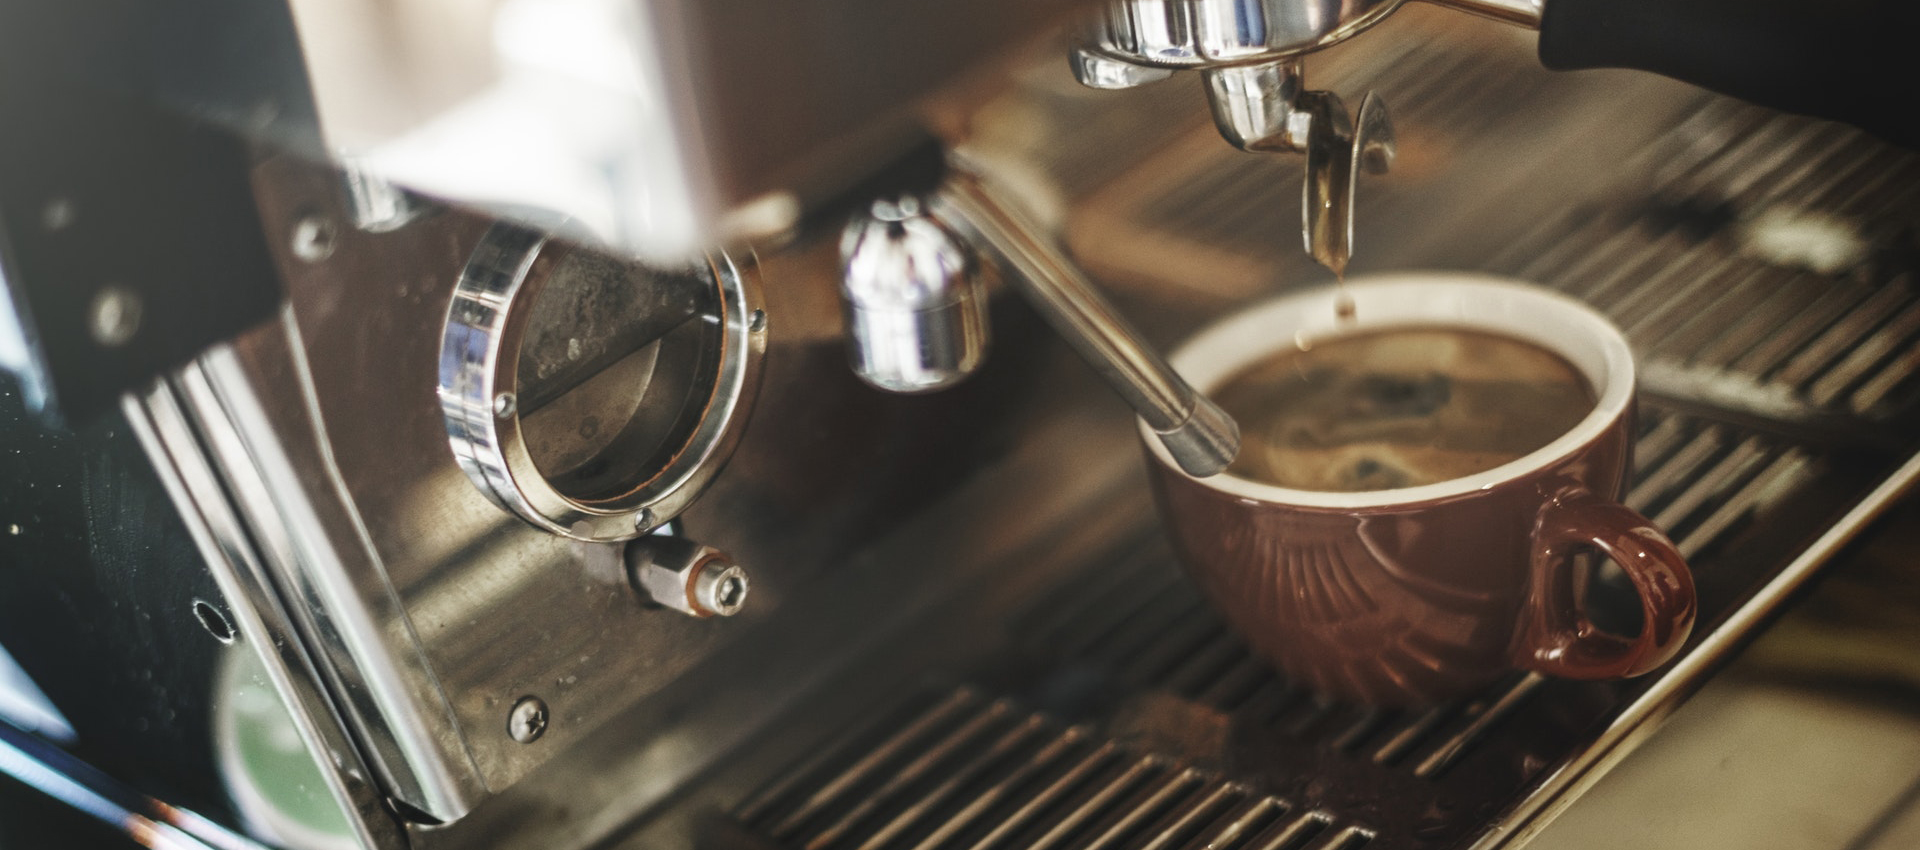 Espresso machine brewing up a cup of coffee.